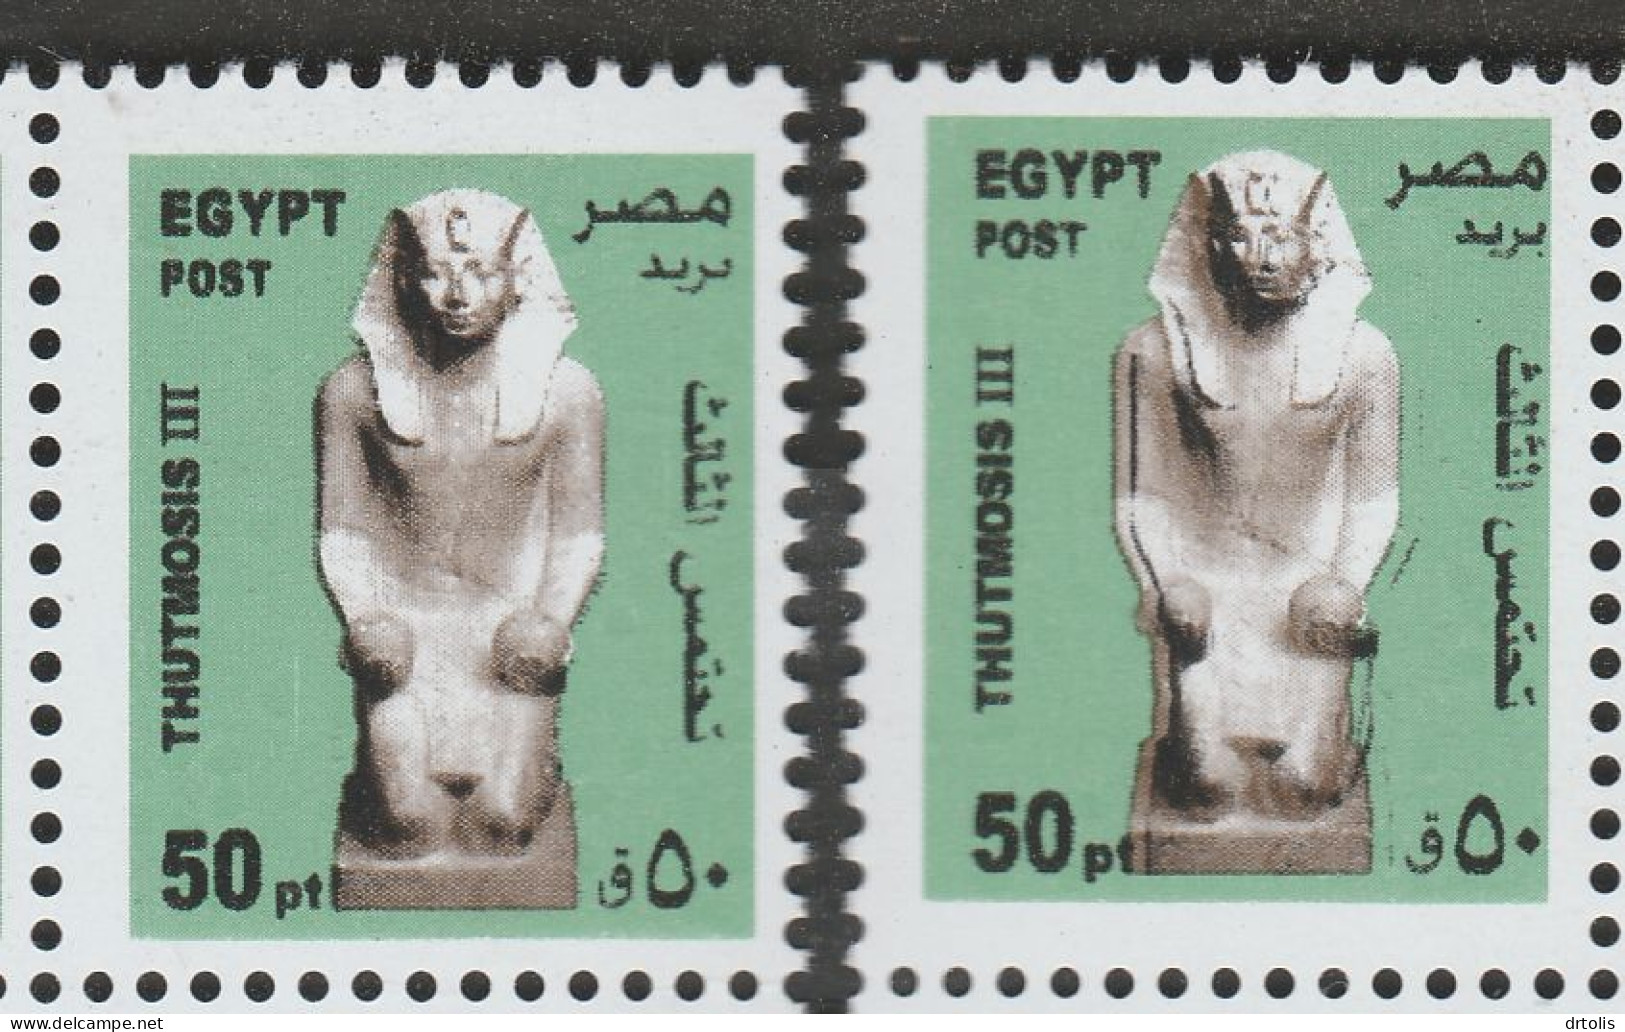 EGYPT / 2013 / A RARE PRINTING ERROR / THUTMOSE III / MNH / VF - Ongebruikt